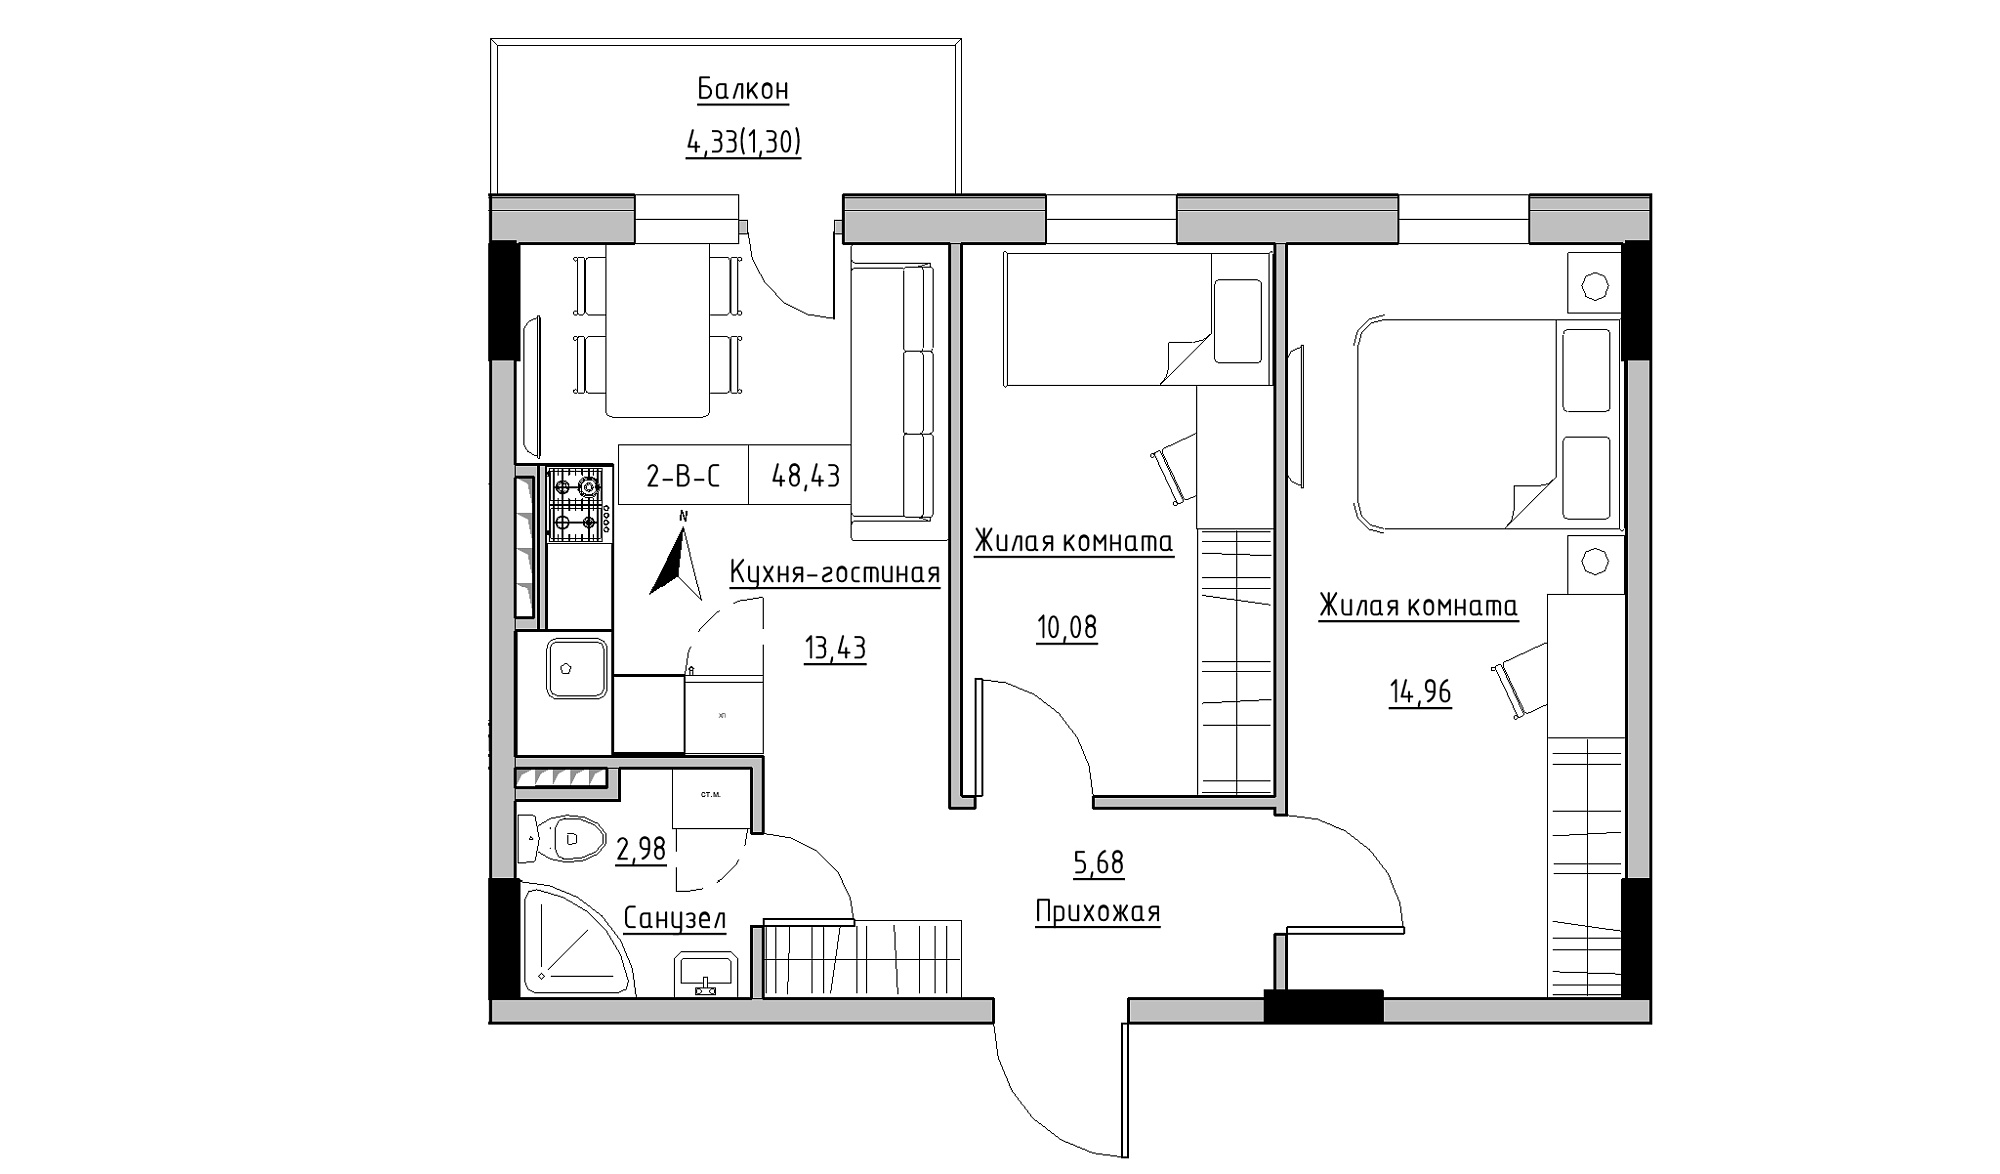 Planning 2-rm flats area 48.43m2, KS-025-04/0009.